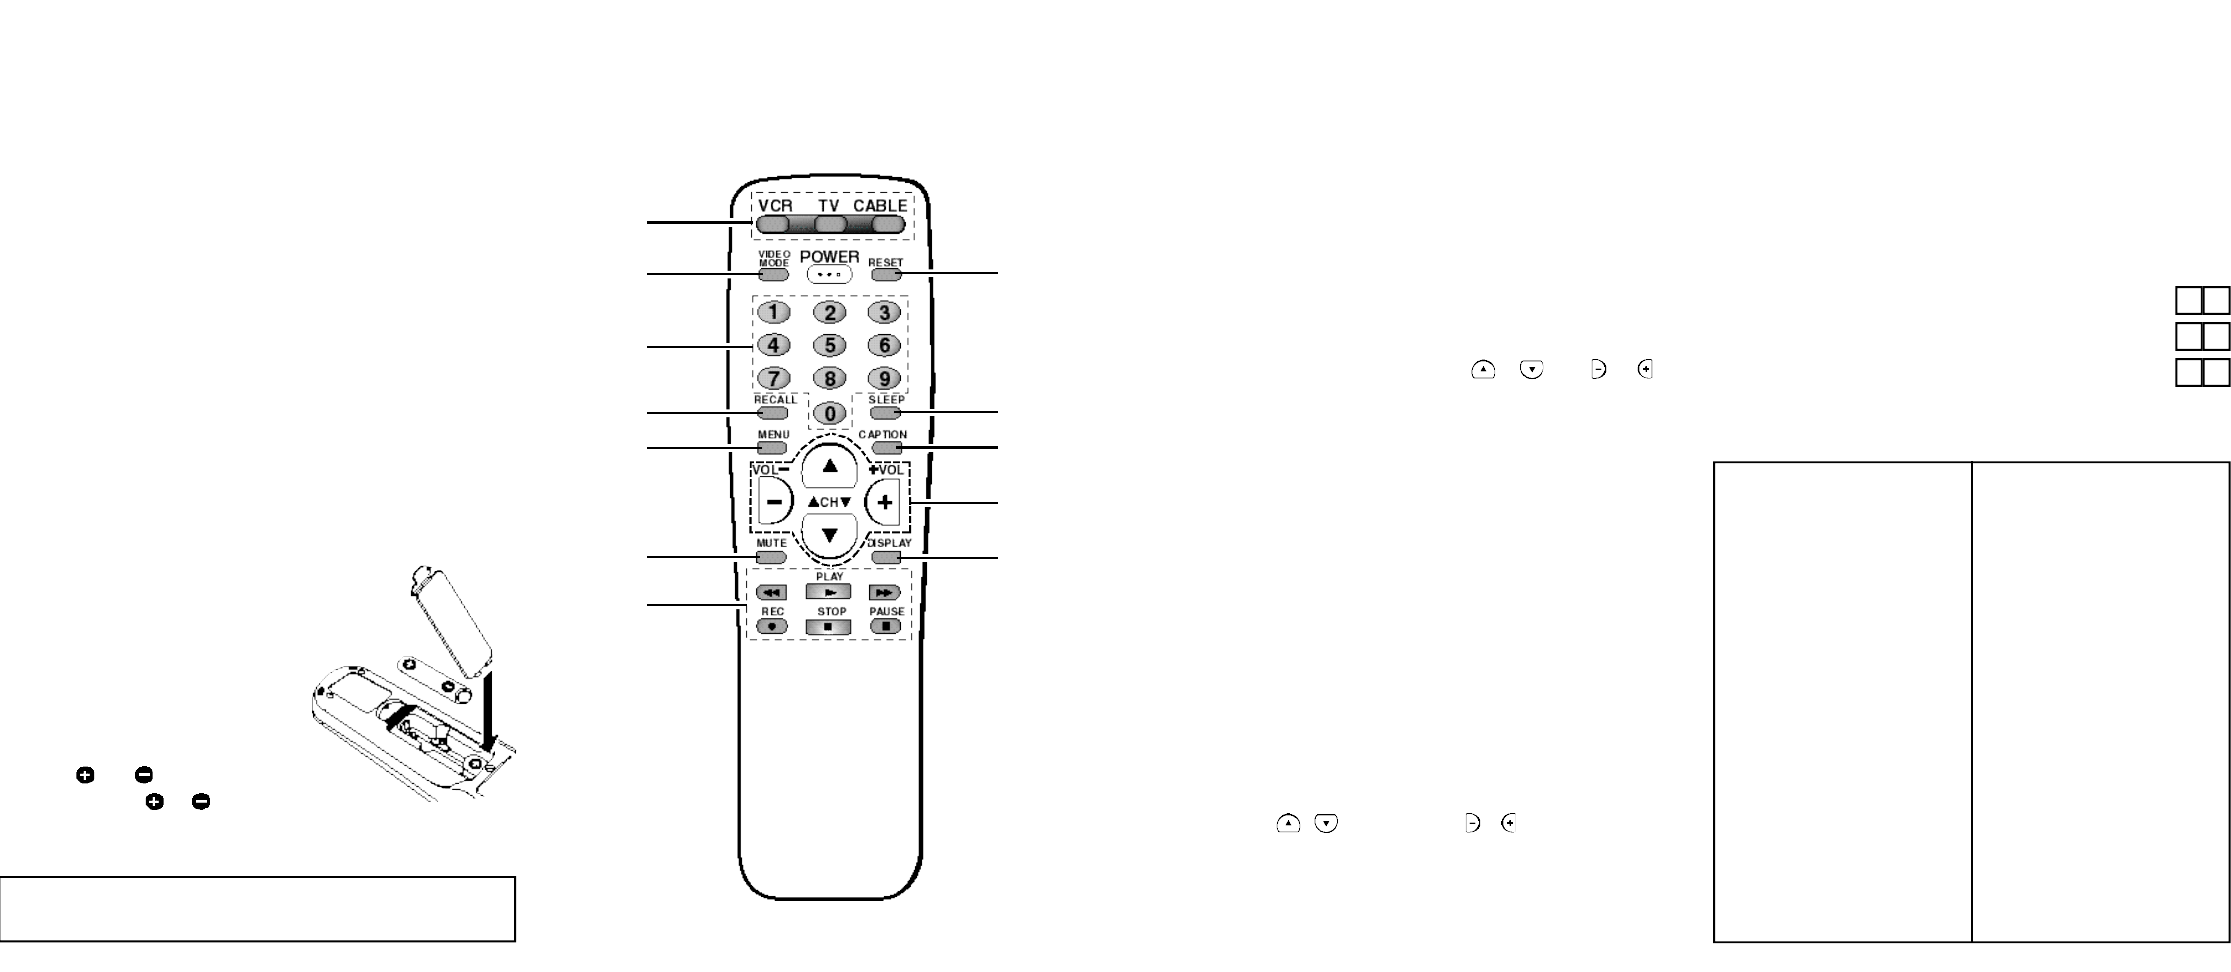 Rmt-05 remote manual